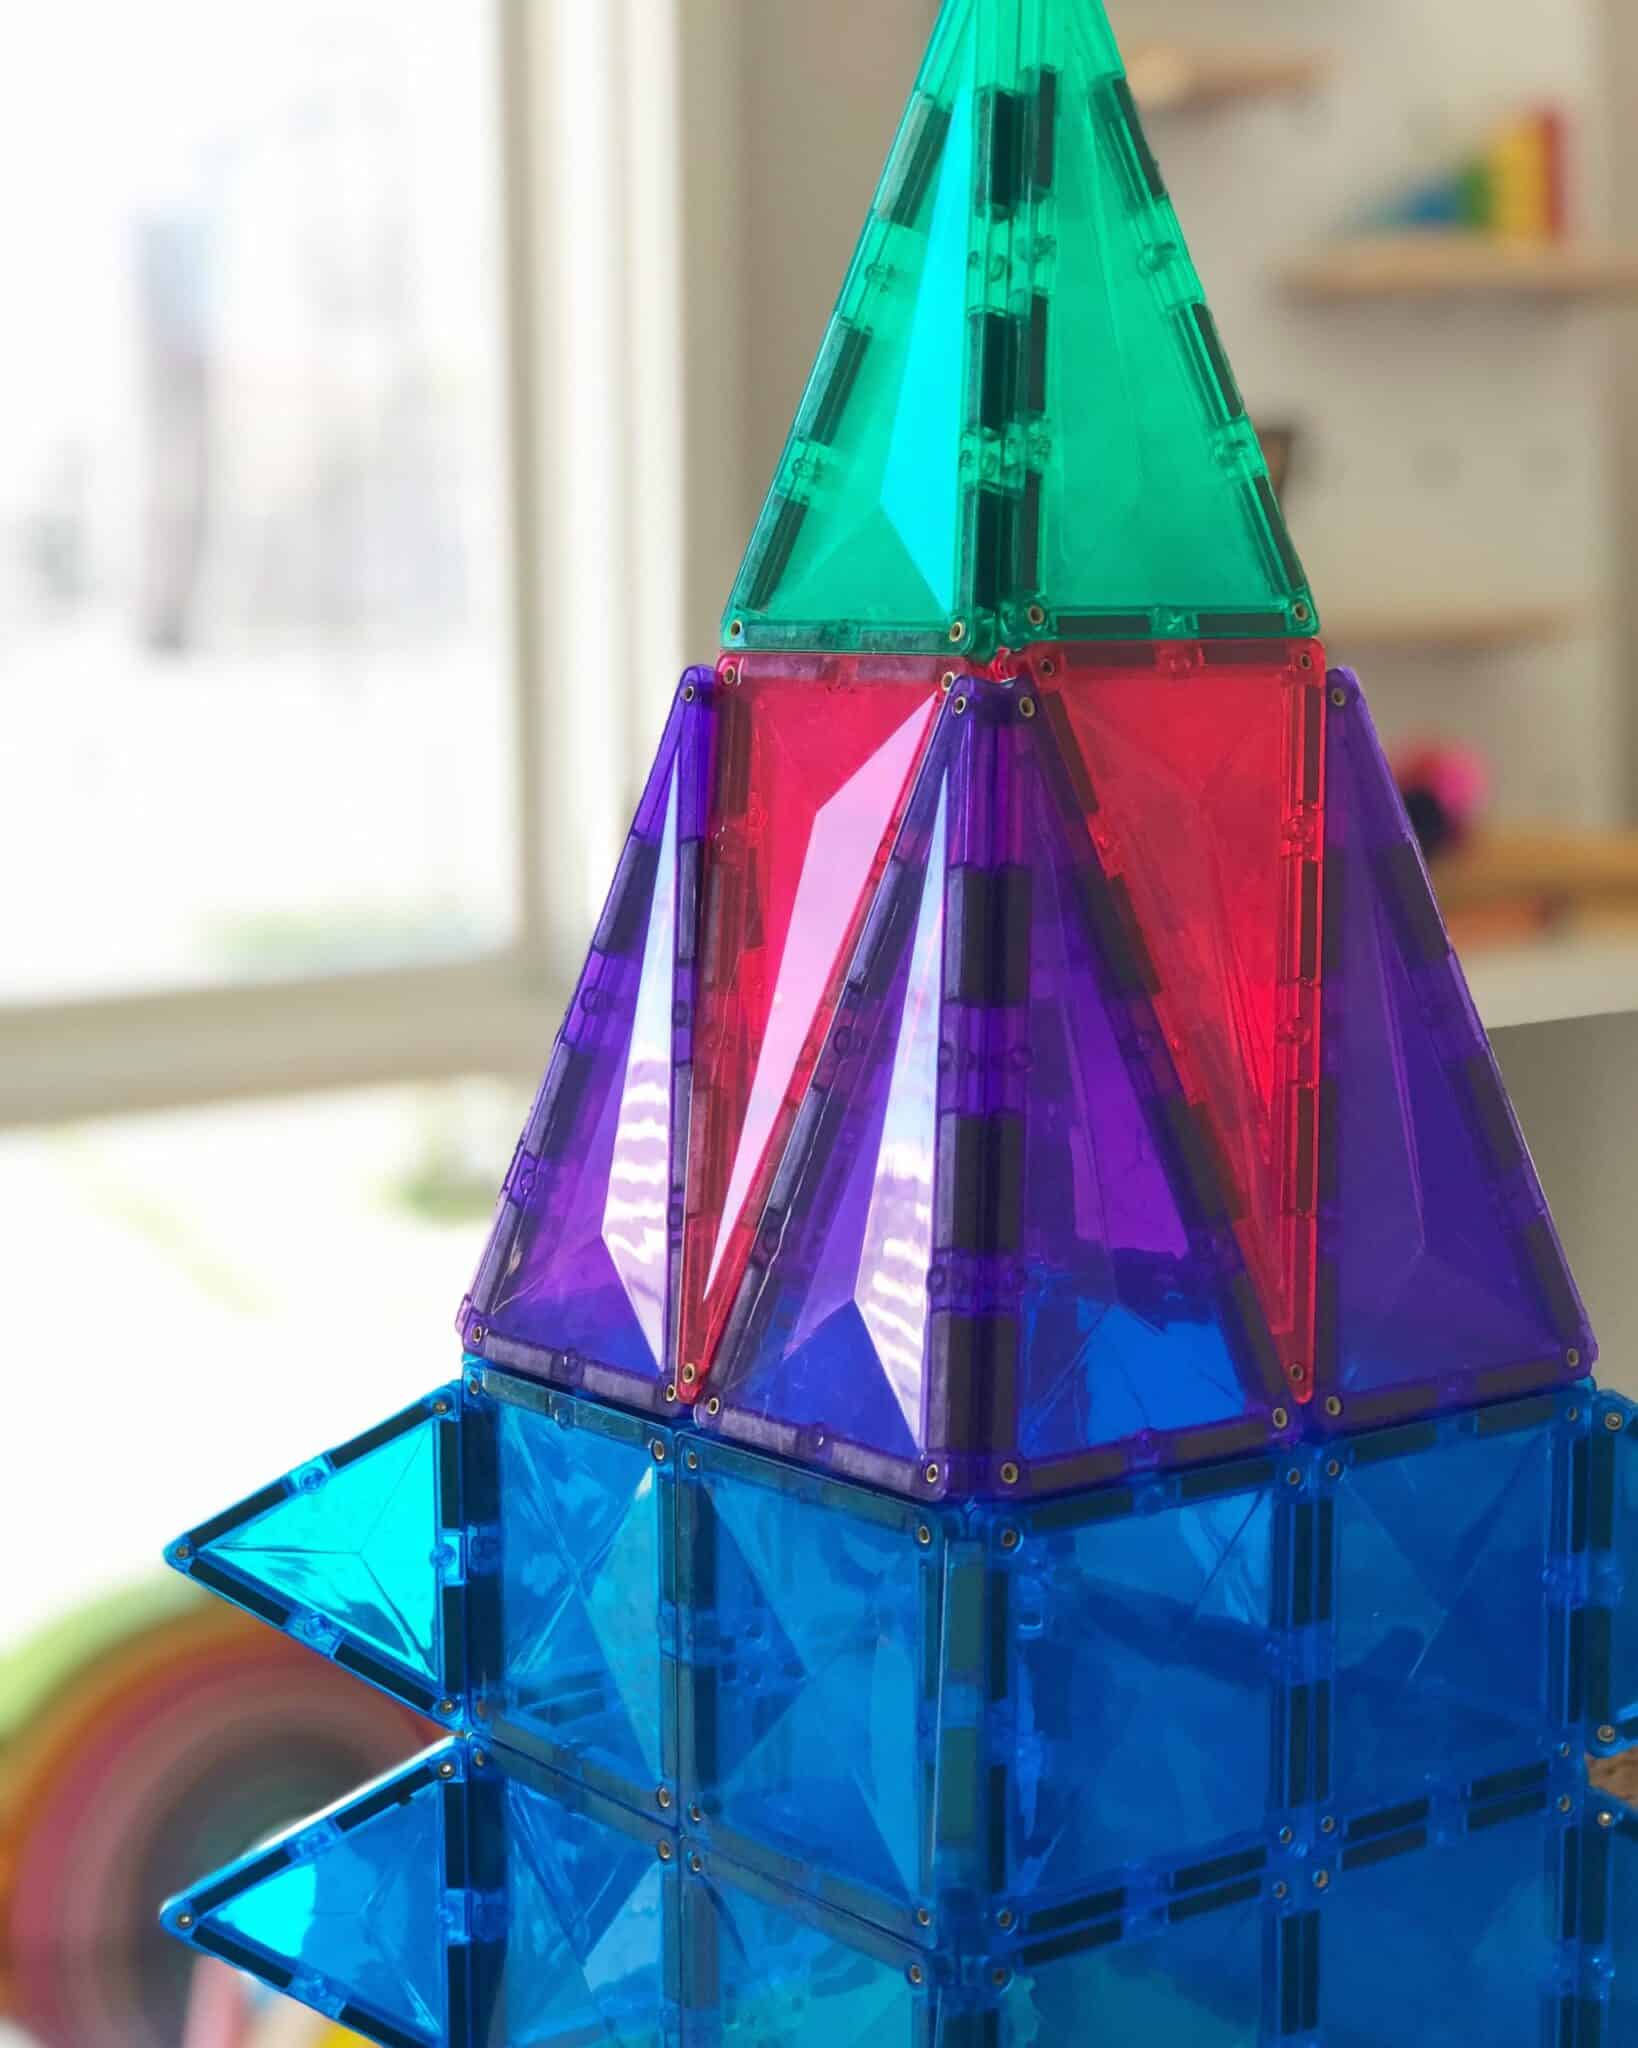 Connetix 62 Piece Magnetic Tiles Set in Rainbow | 20% OFF SALE | Children of the Wild